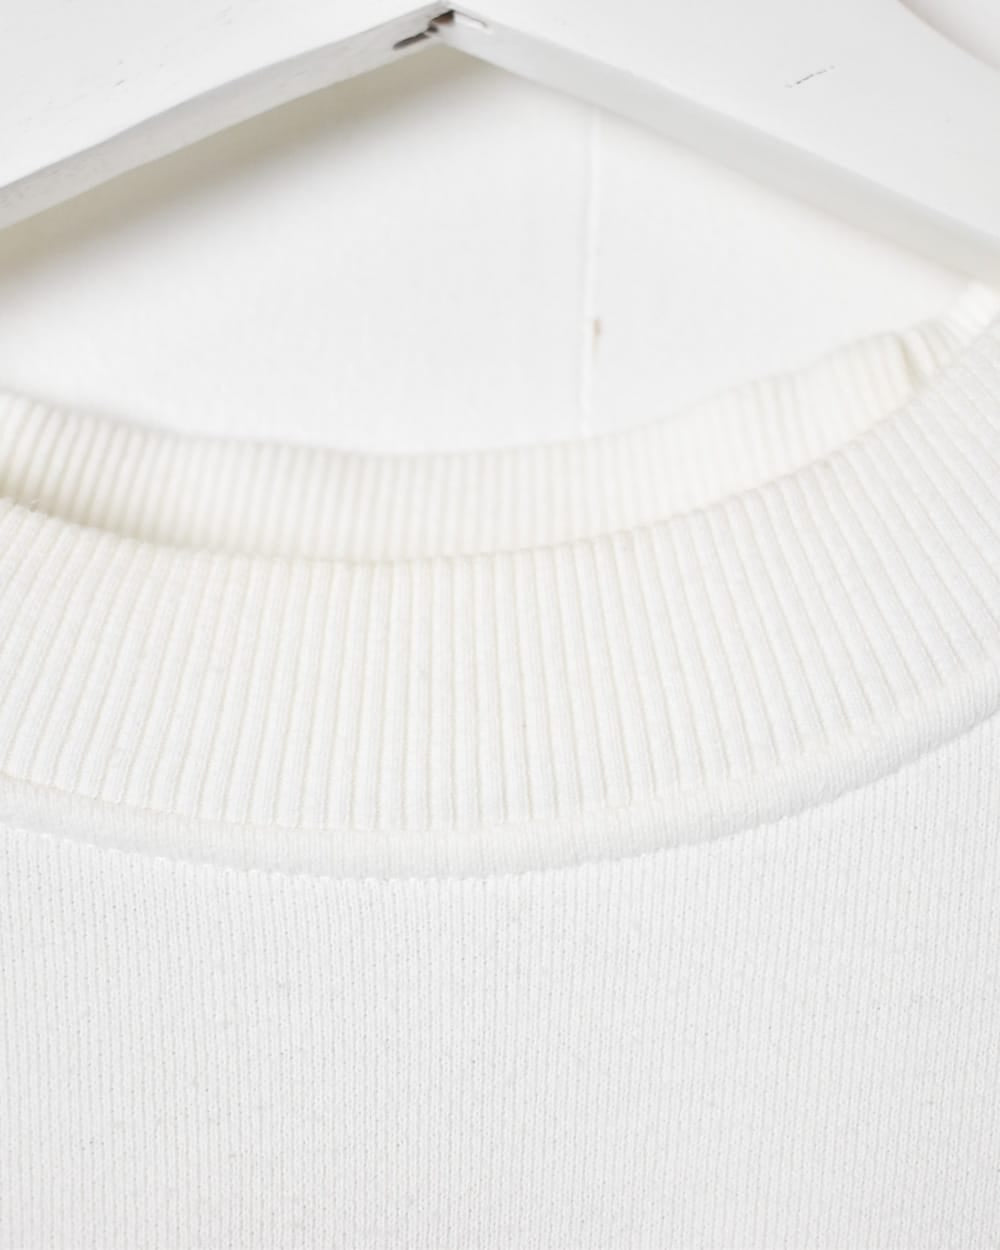 White Adidas Pee Wee League Sweatshirt - Small